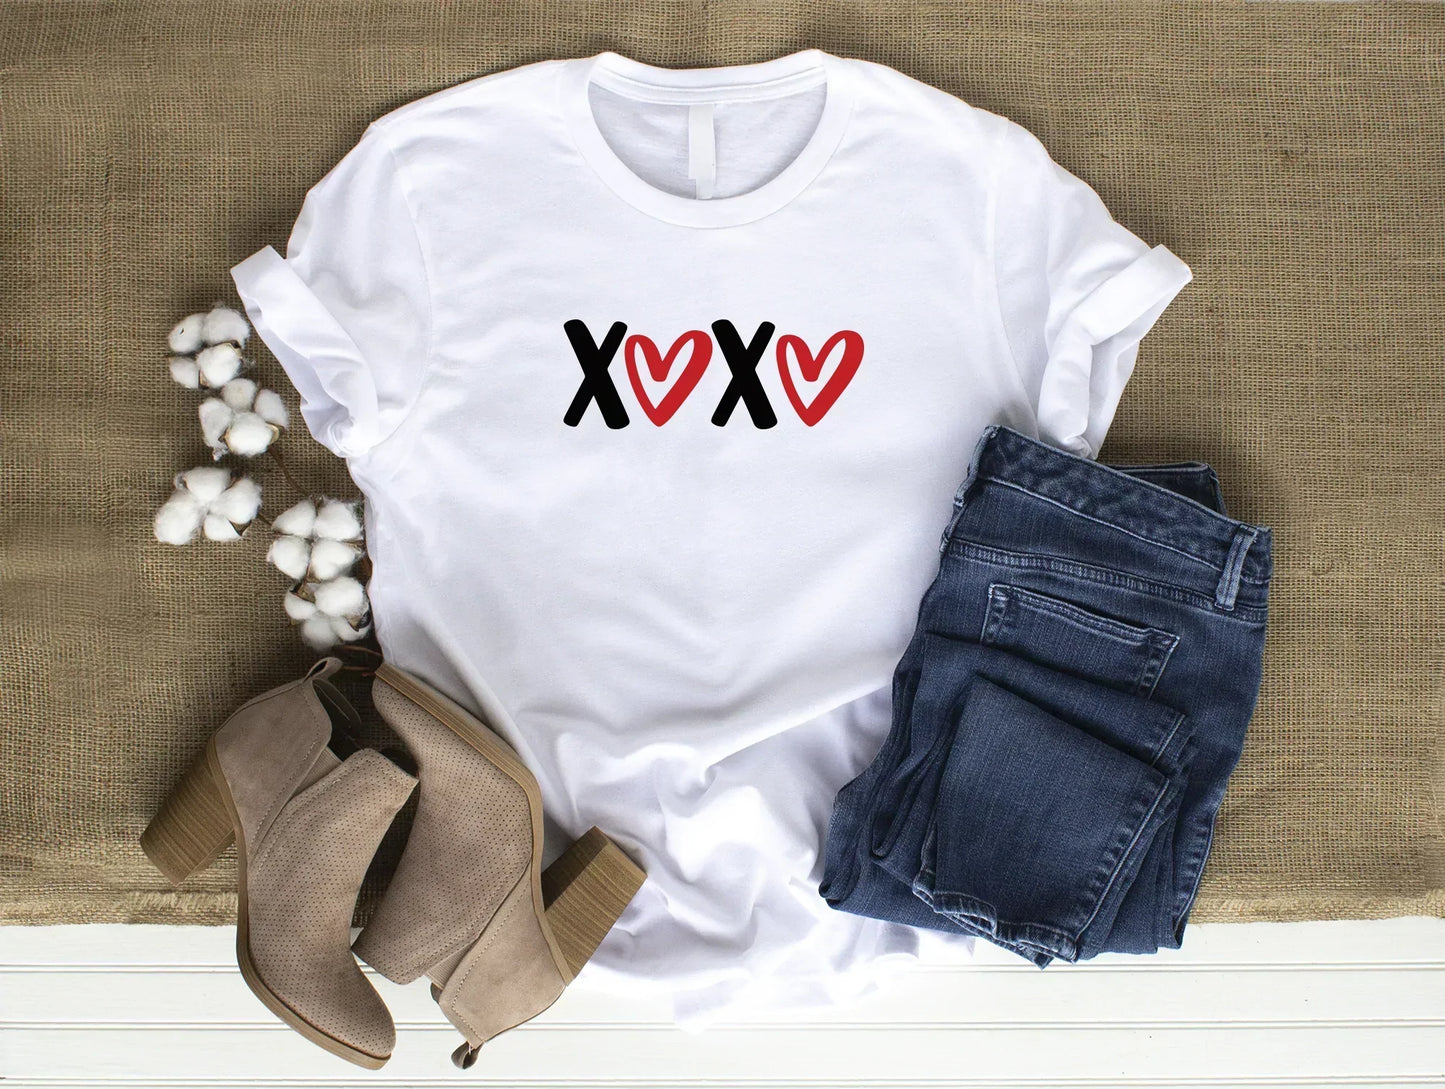 XOXO Plain Cute Comfy Valentine's Day White T-Shirt 3XL